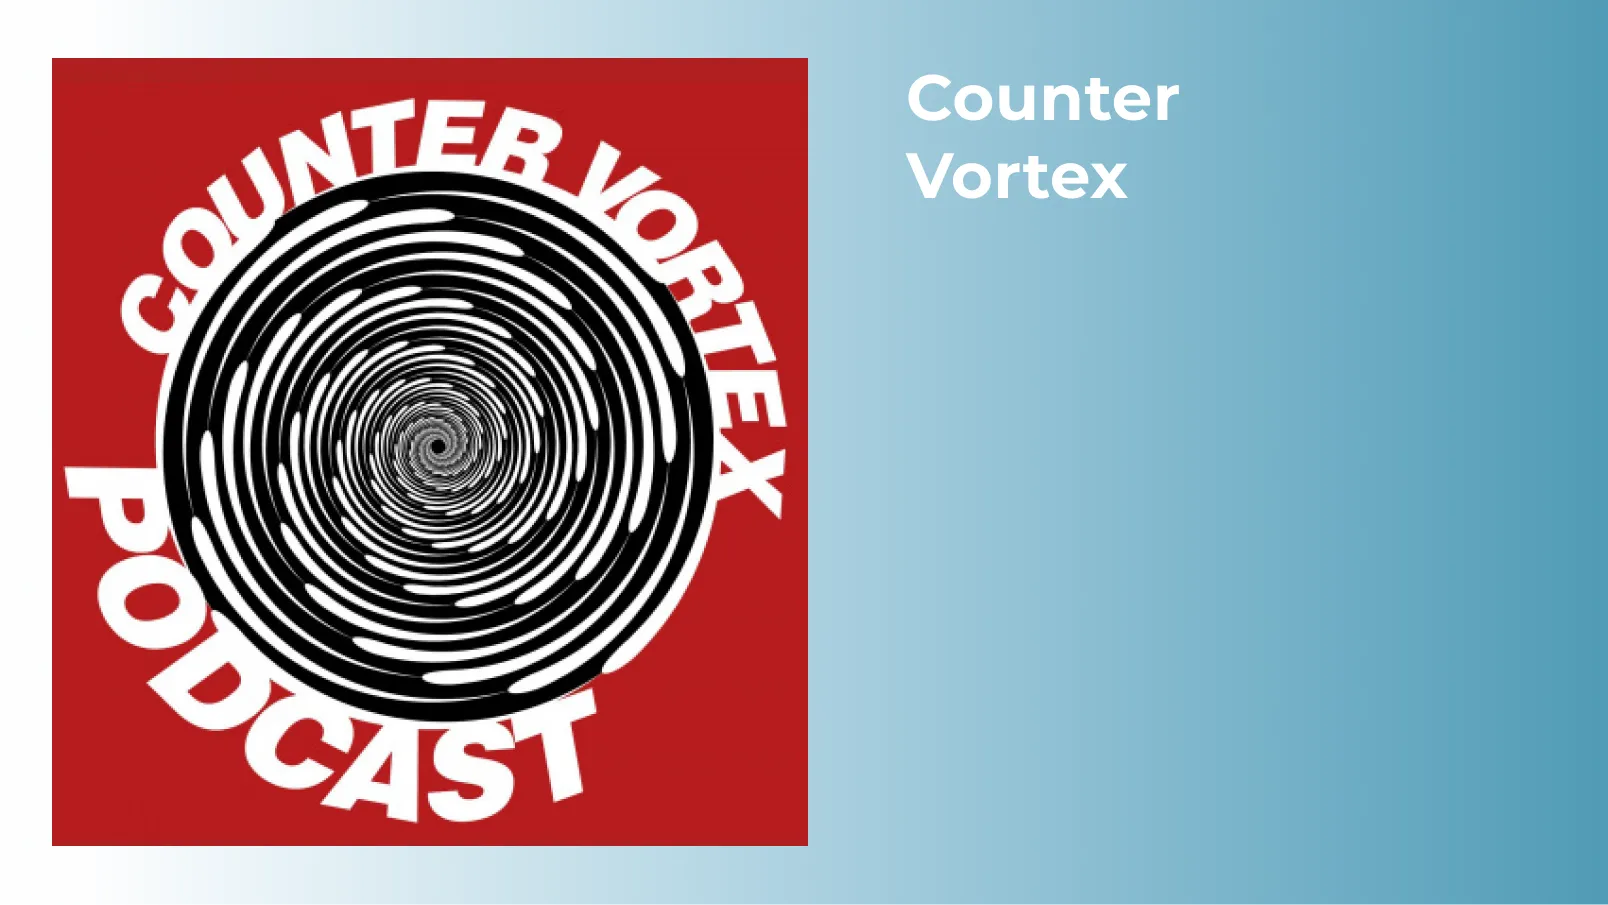 www.countervortex.org